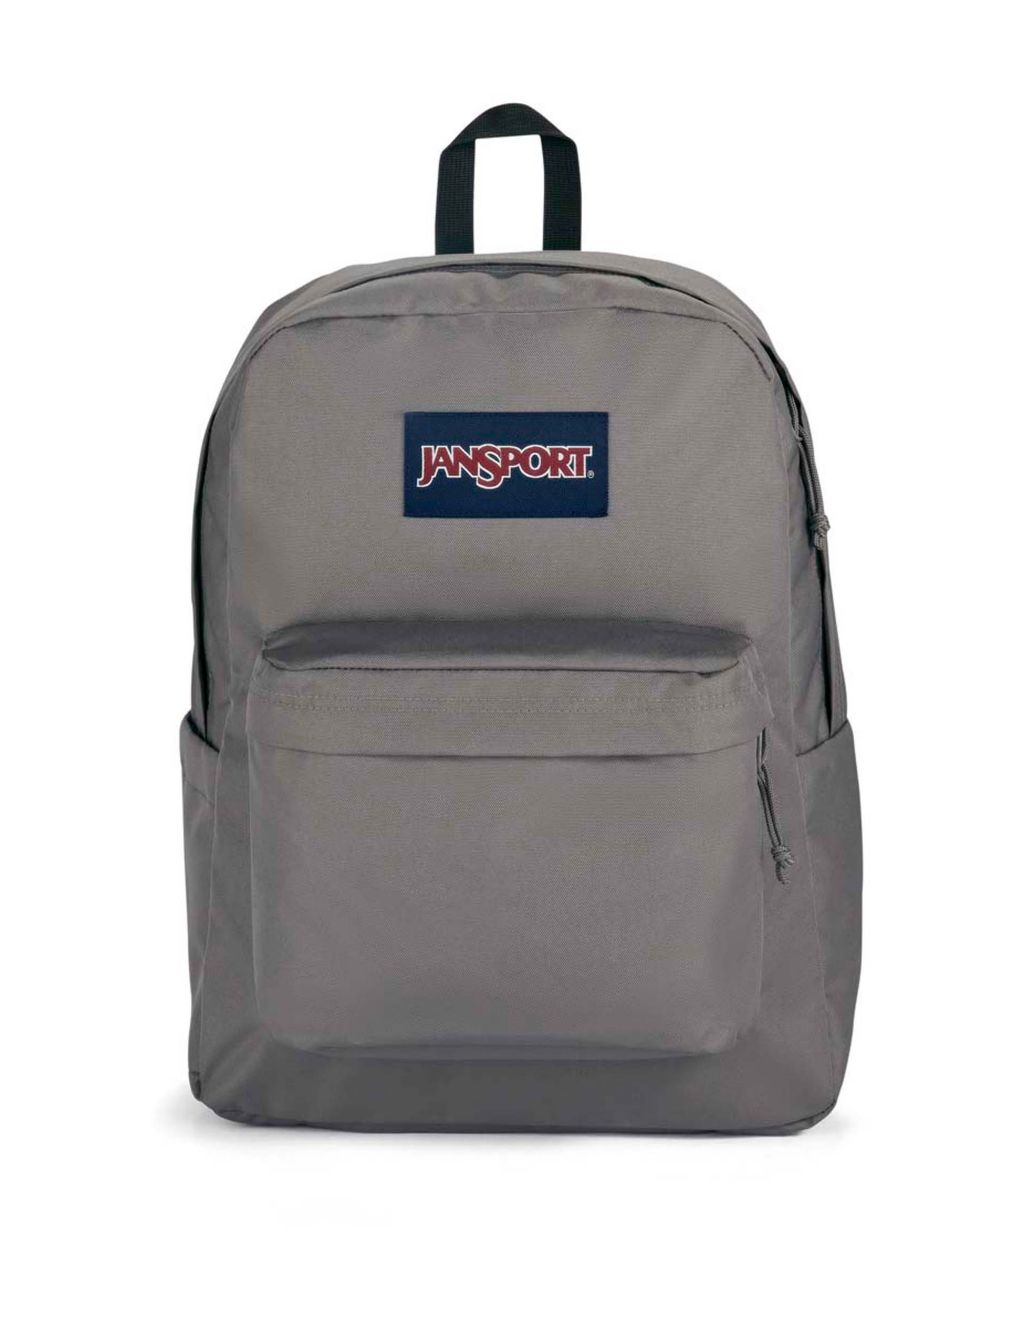 SuperBreak Plus Backpack image 1